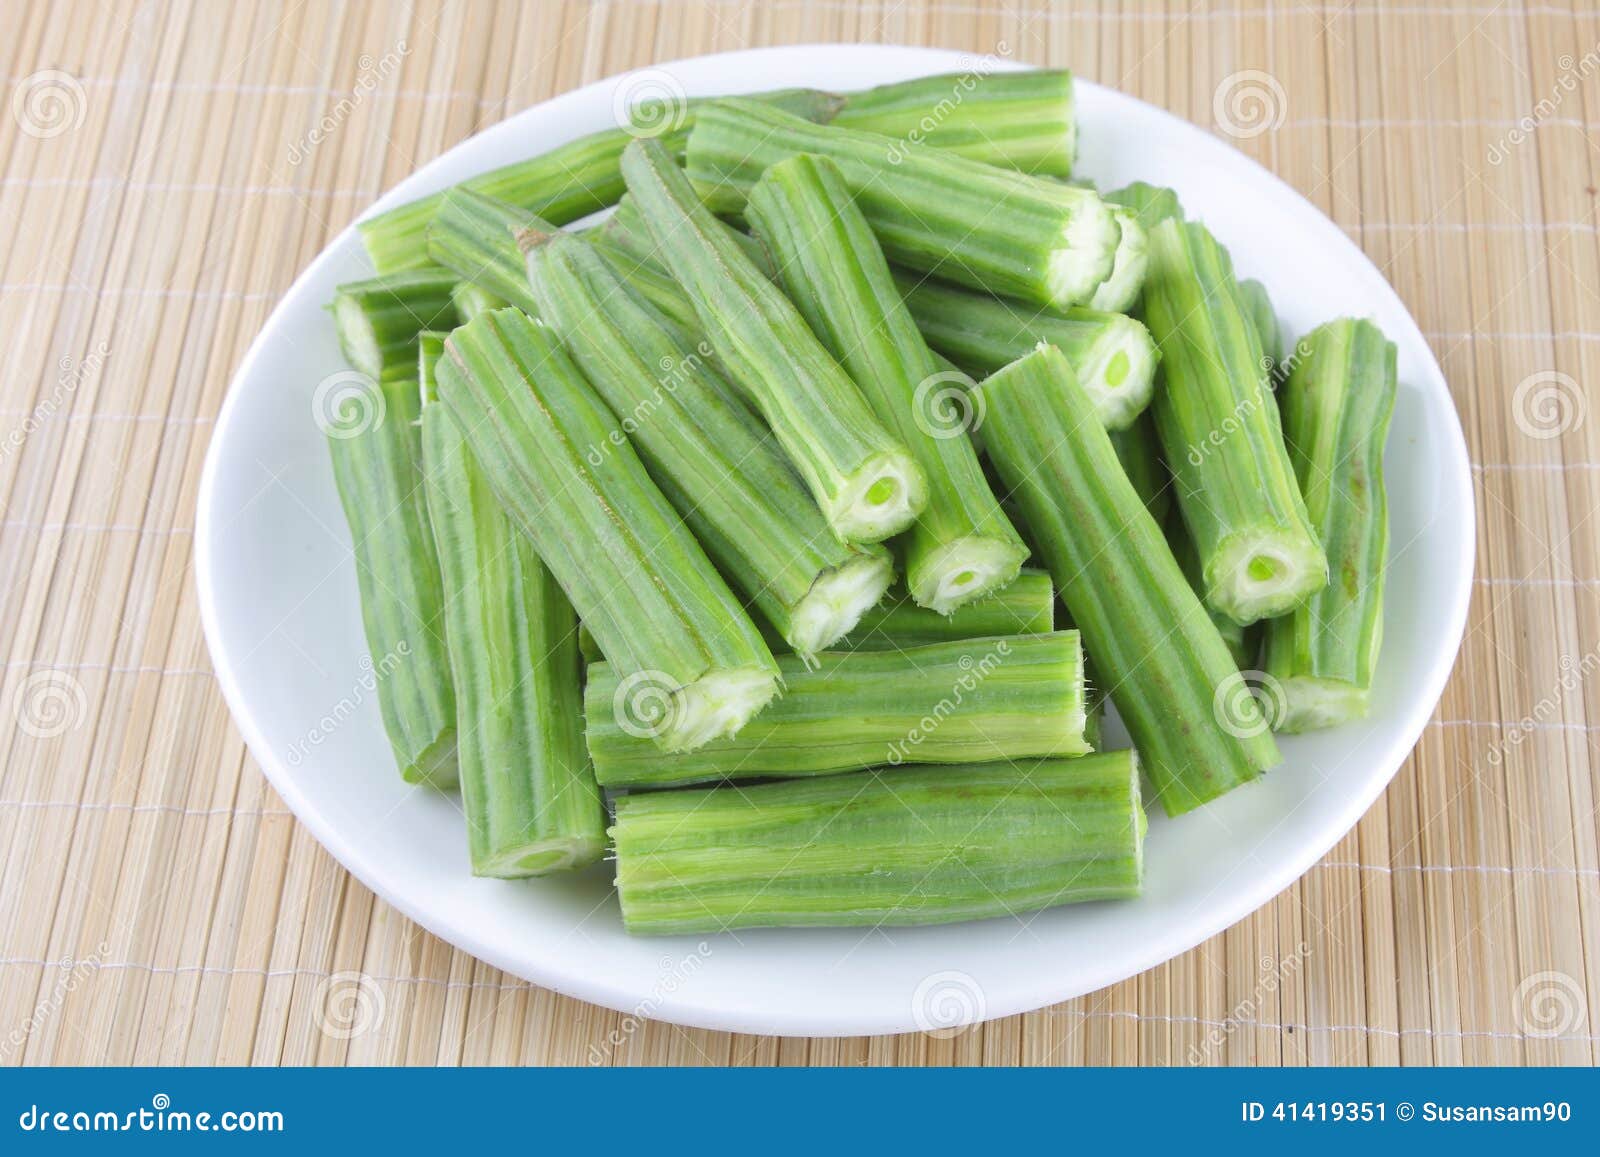 drumstick vegetable or moringa.